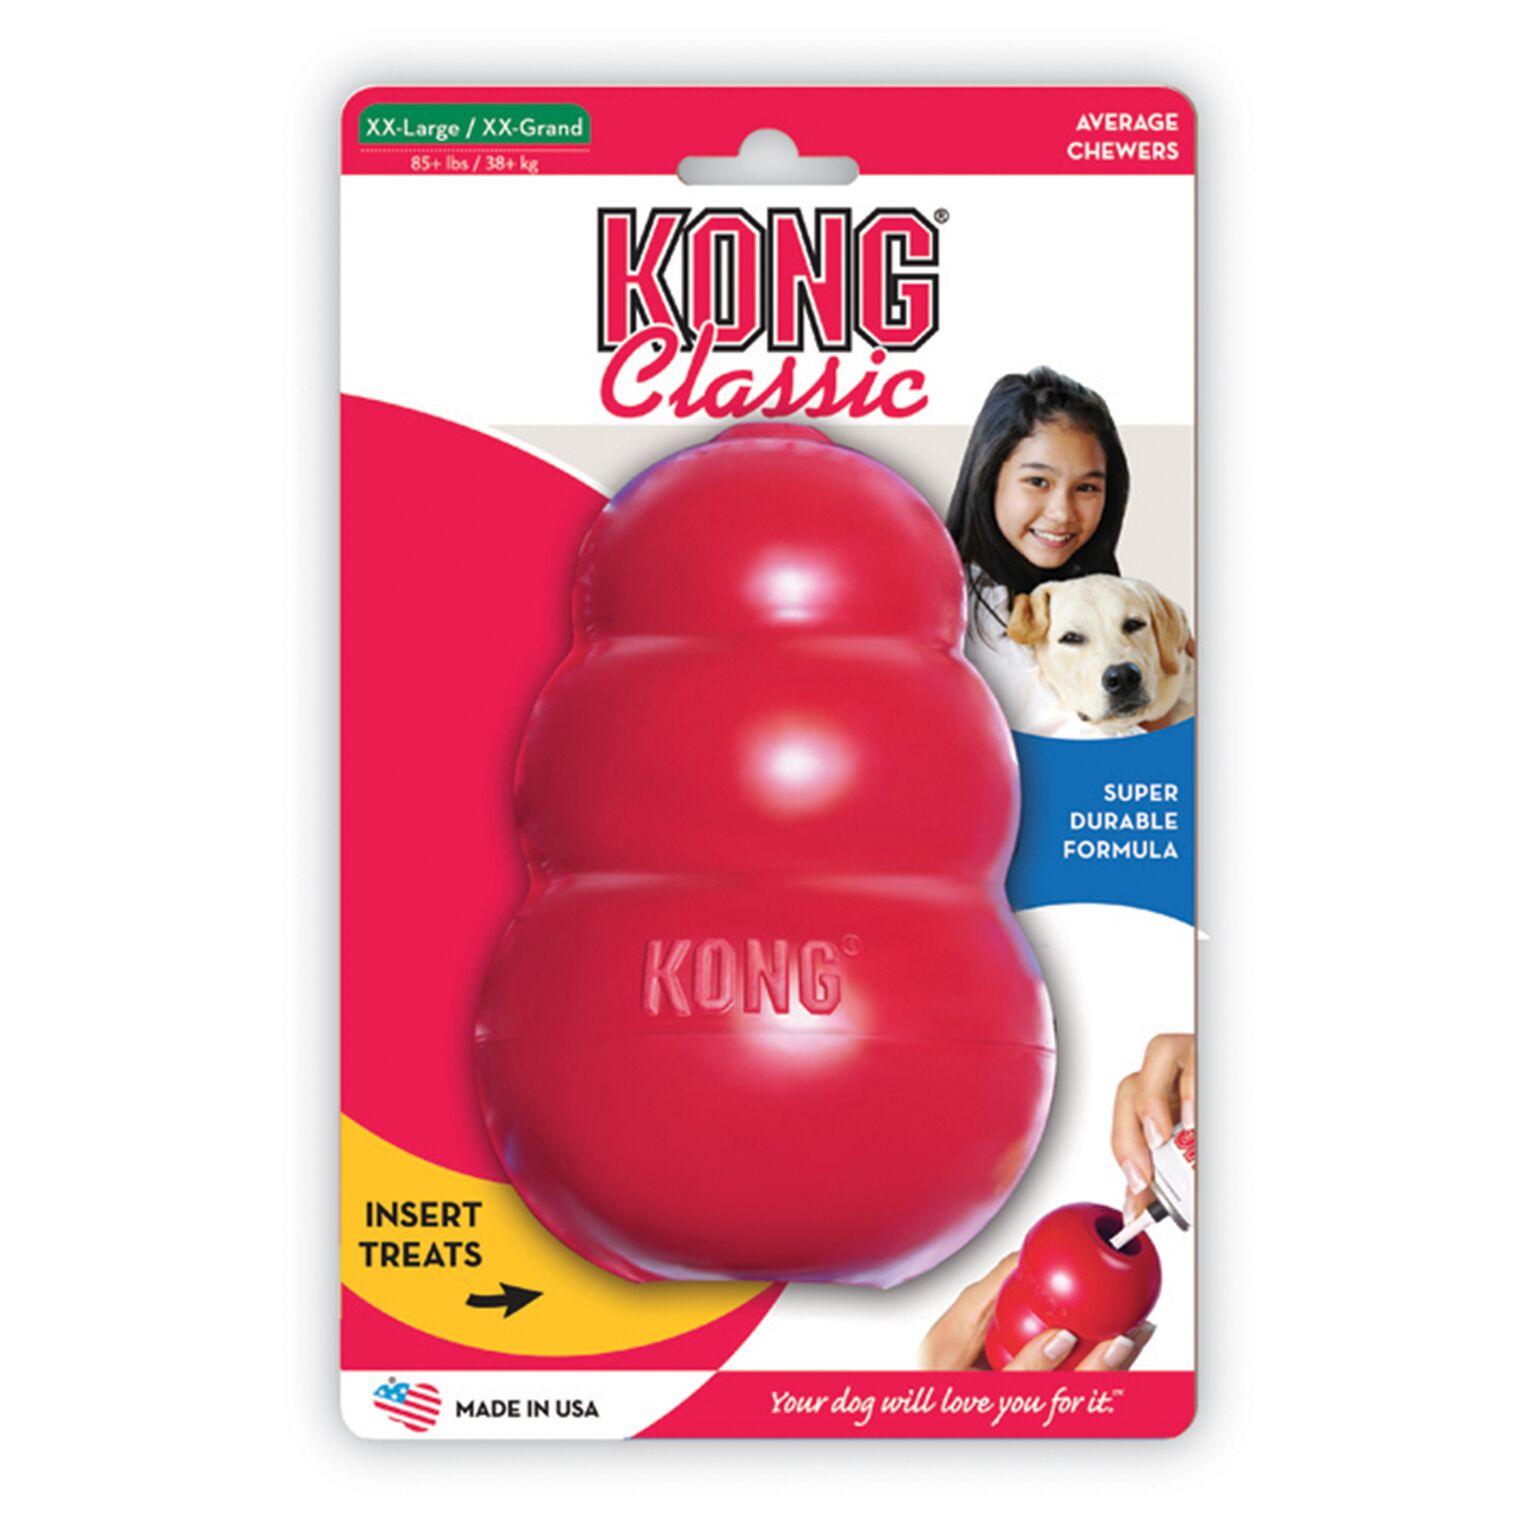 KONG Classic Hard Rubber Dental Dog Toys